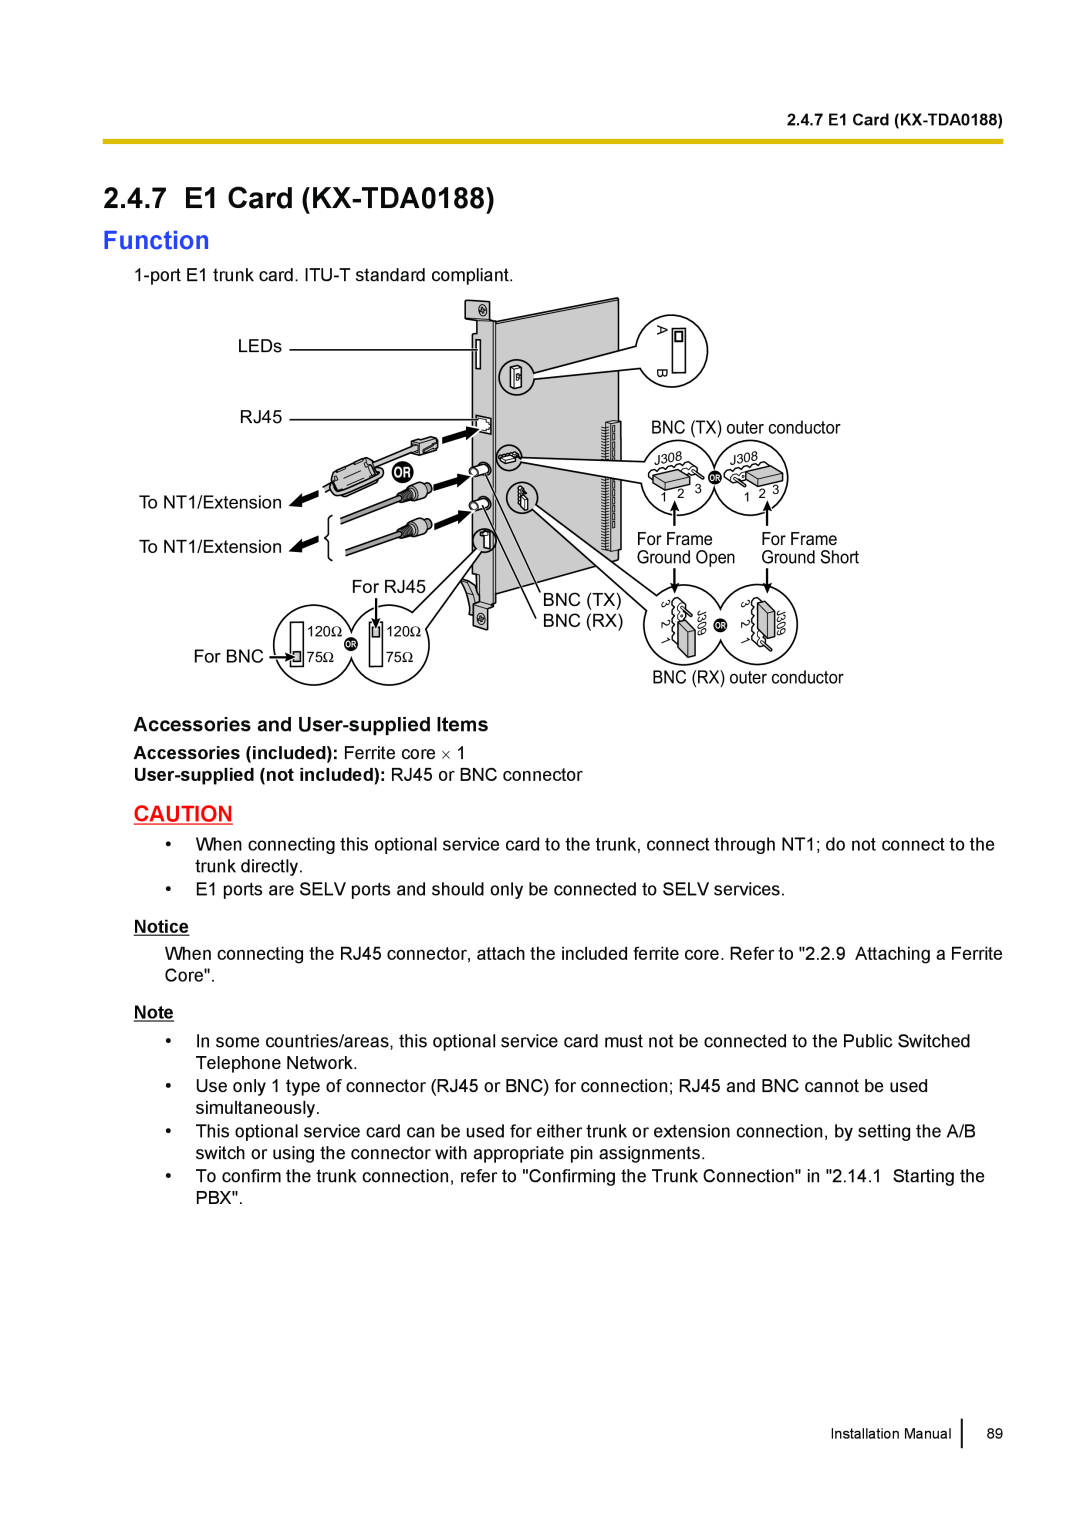 Panasonic KX-TDA100 installation manual 2.4.7 E1 Card KX-TDA0188, Function, Accessories and User-supplied Items, J308, J309 